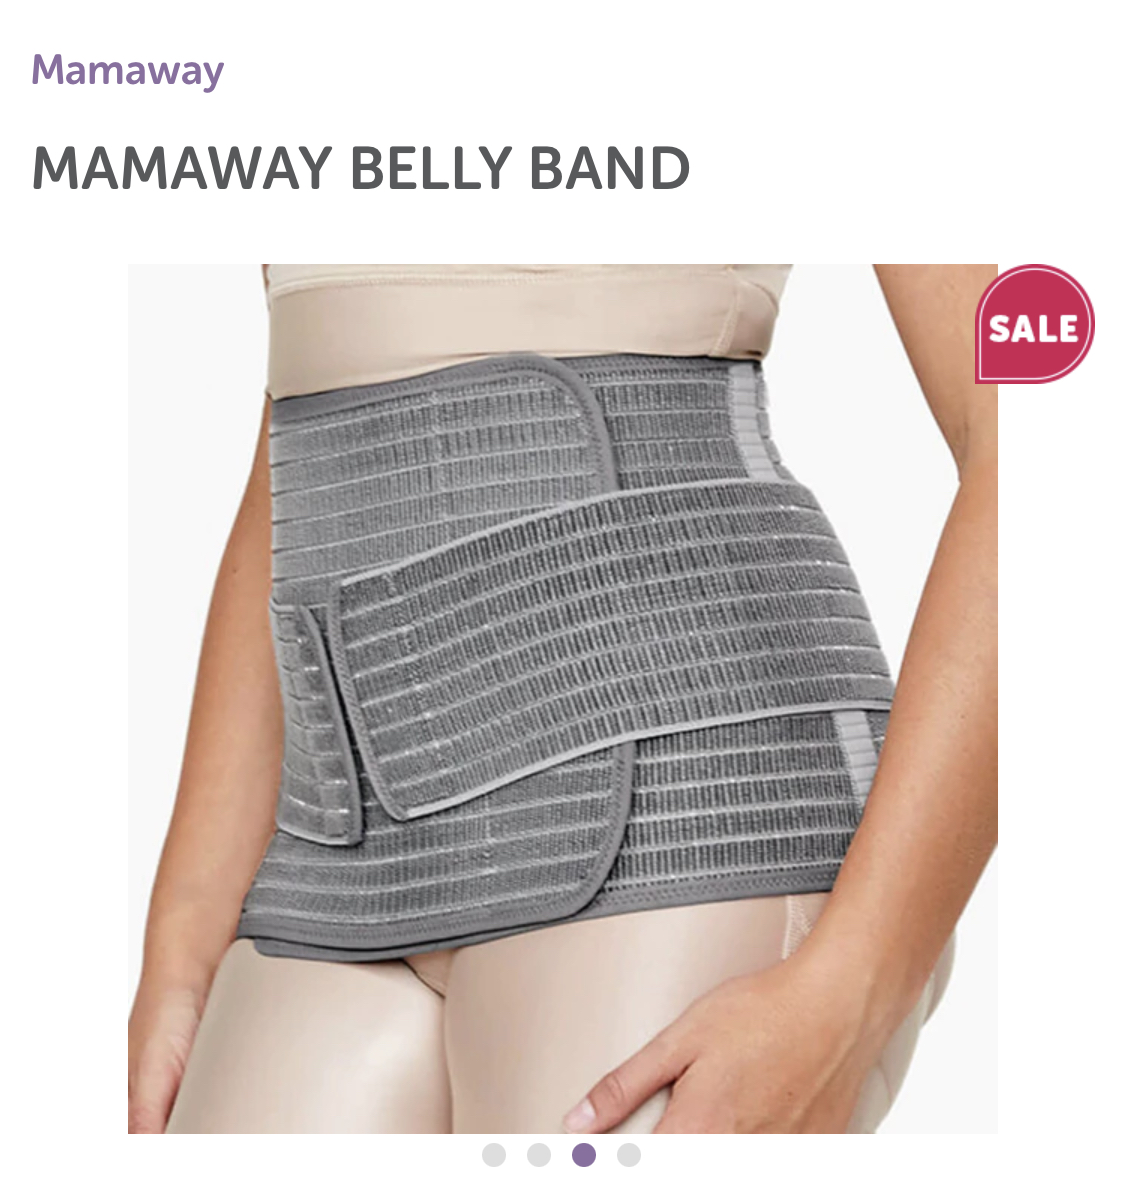 Mamaway Belly Band